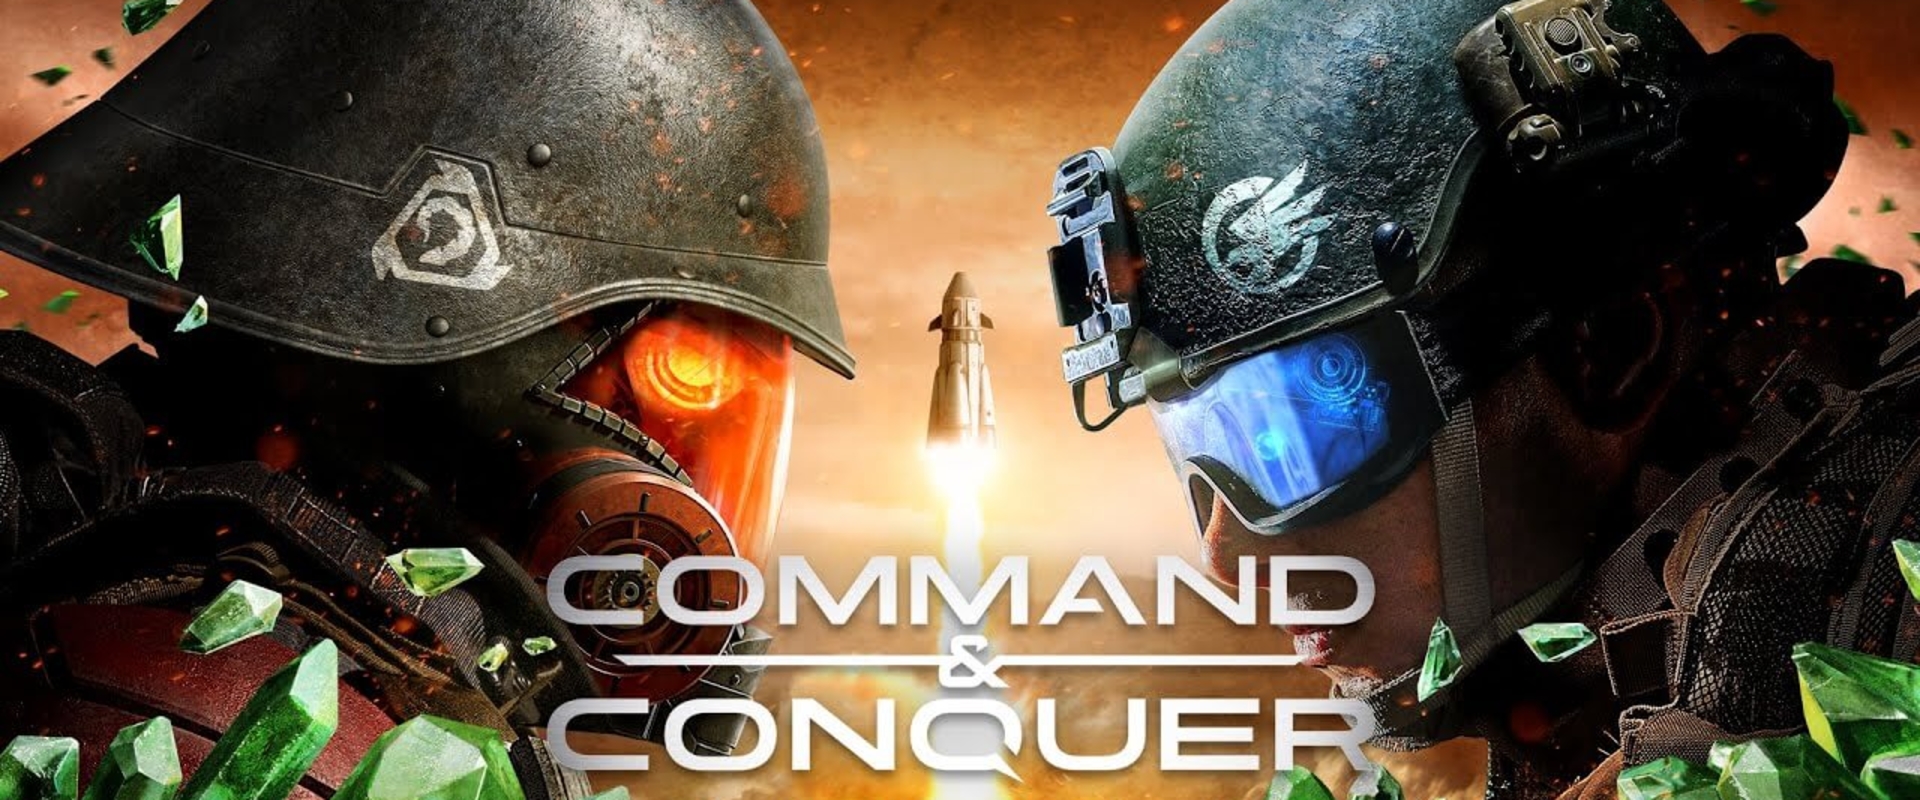 Megjelenési időpontot kapott a Command & Conquer Rivals!